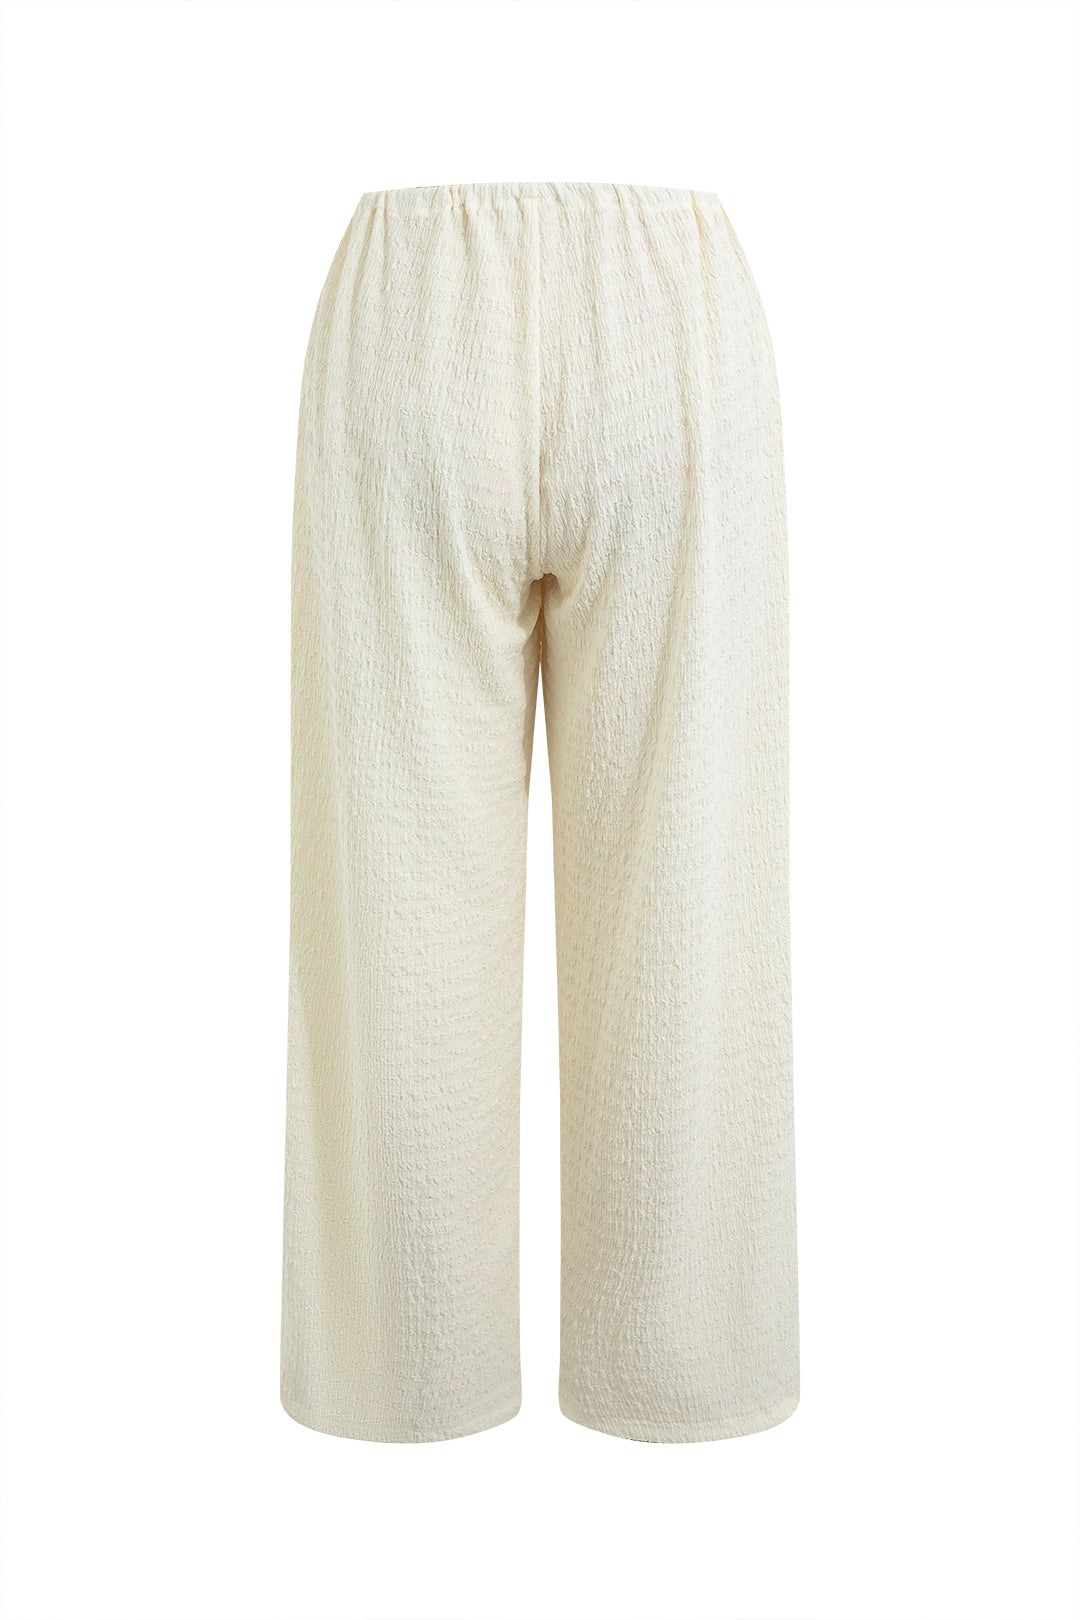 Asymmetrical Texture Top And Pants Set